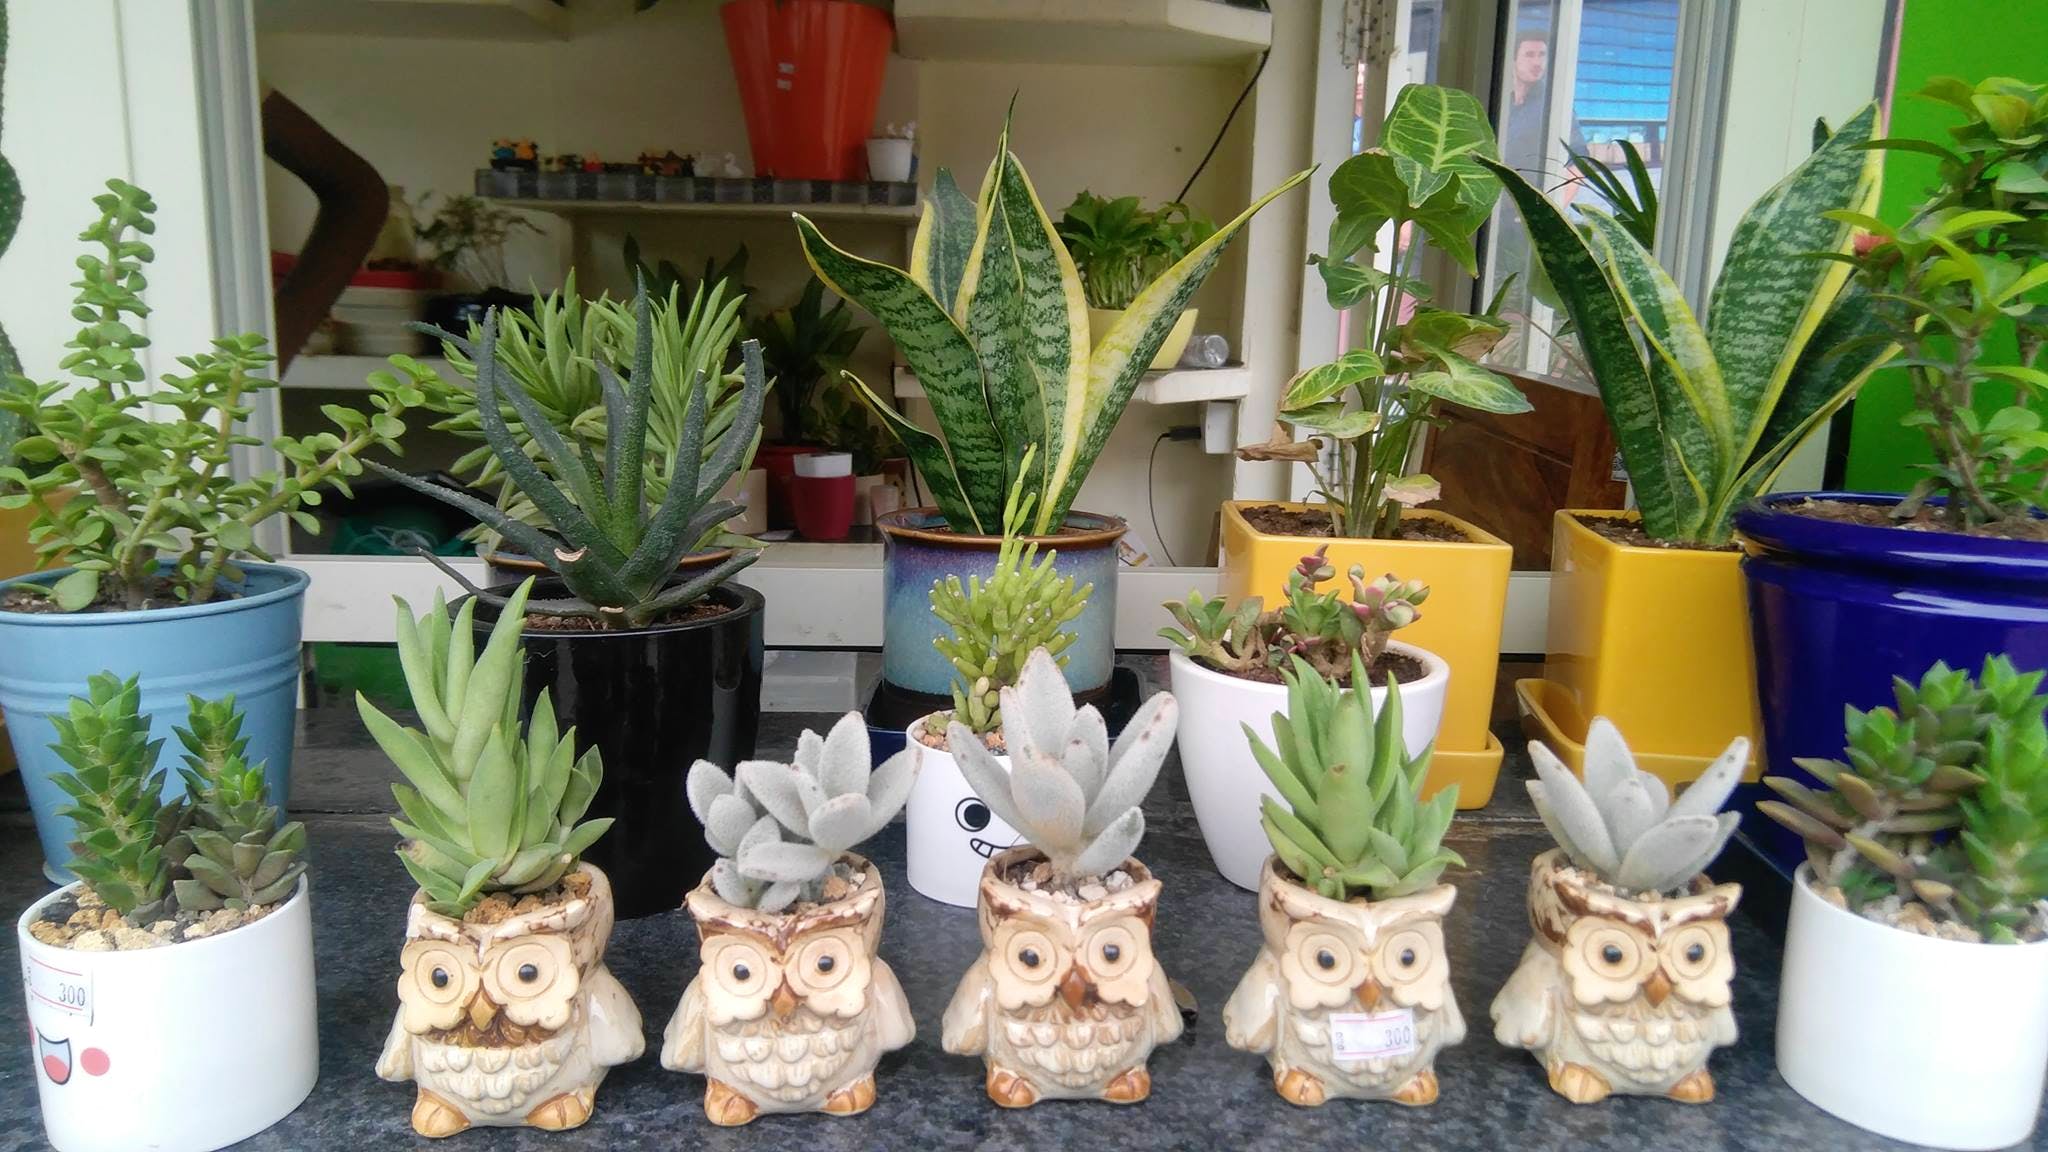 Flowerpot,Houseplant,Plant,Flower,Botany,Terrestrial plant,Cactus,Aloe,Perennial plant